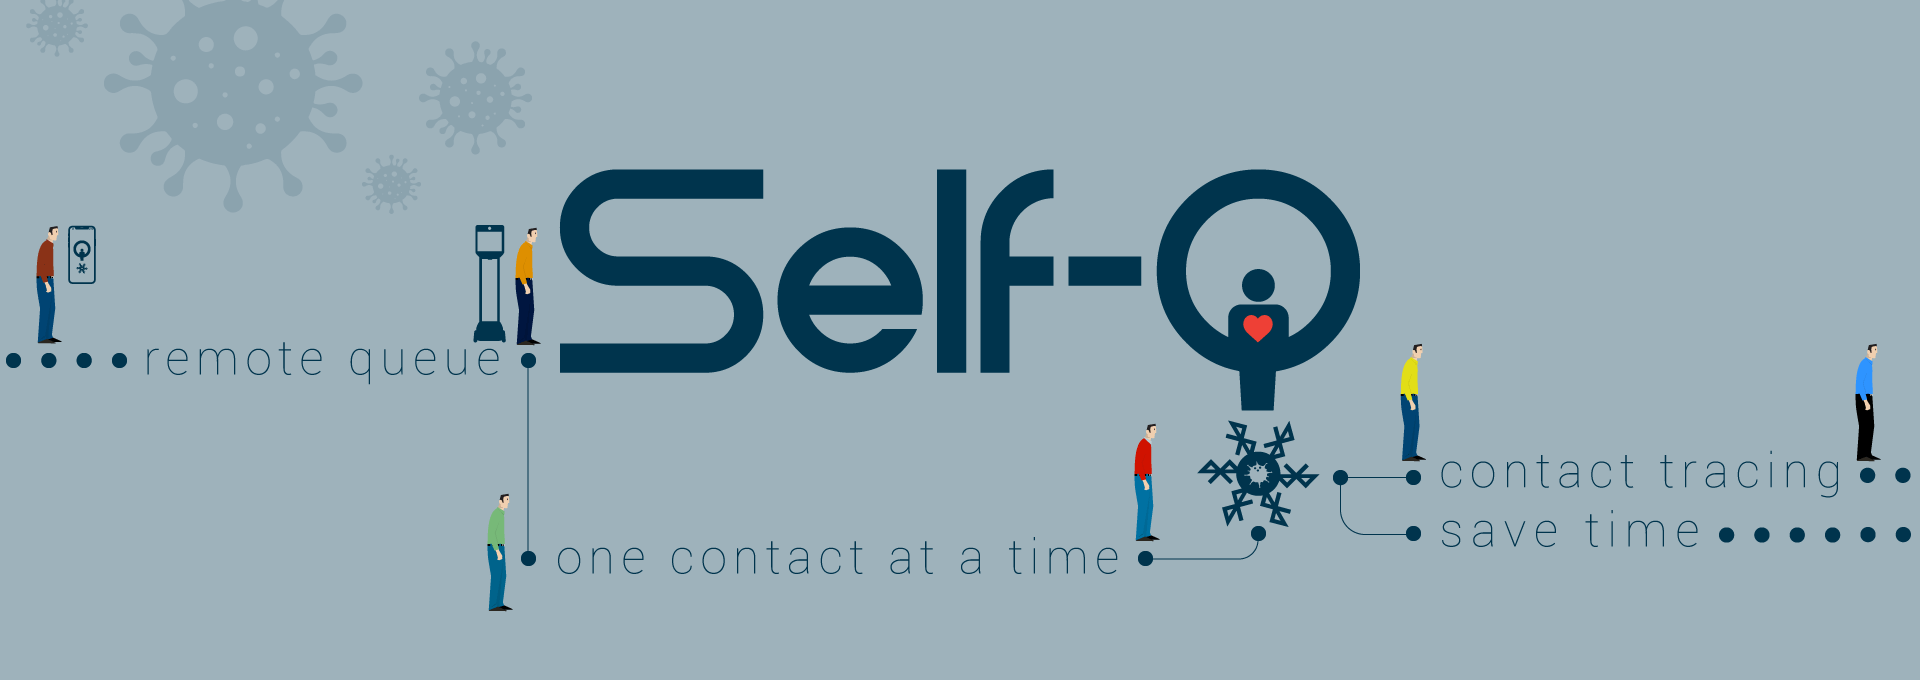 Self-Q Connected Self Queue